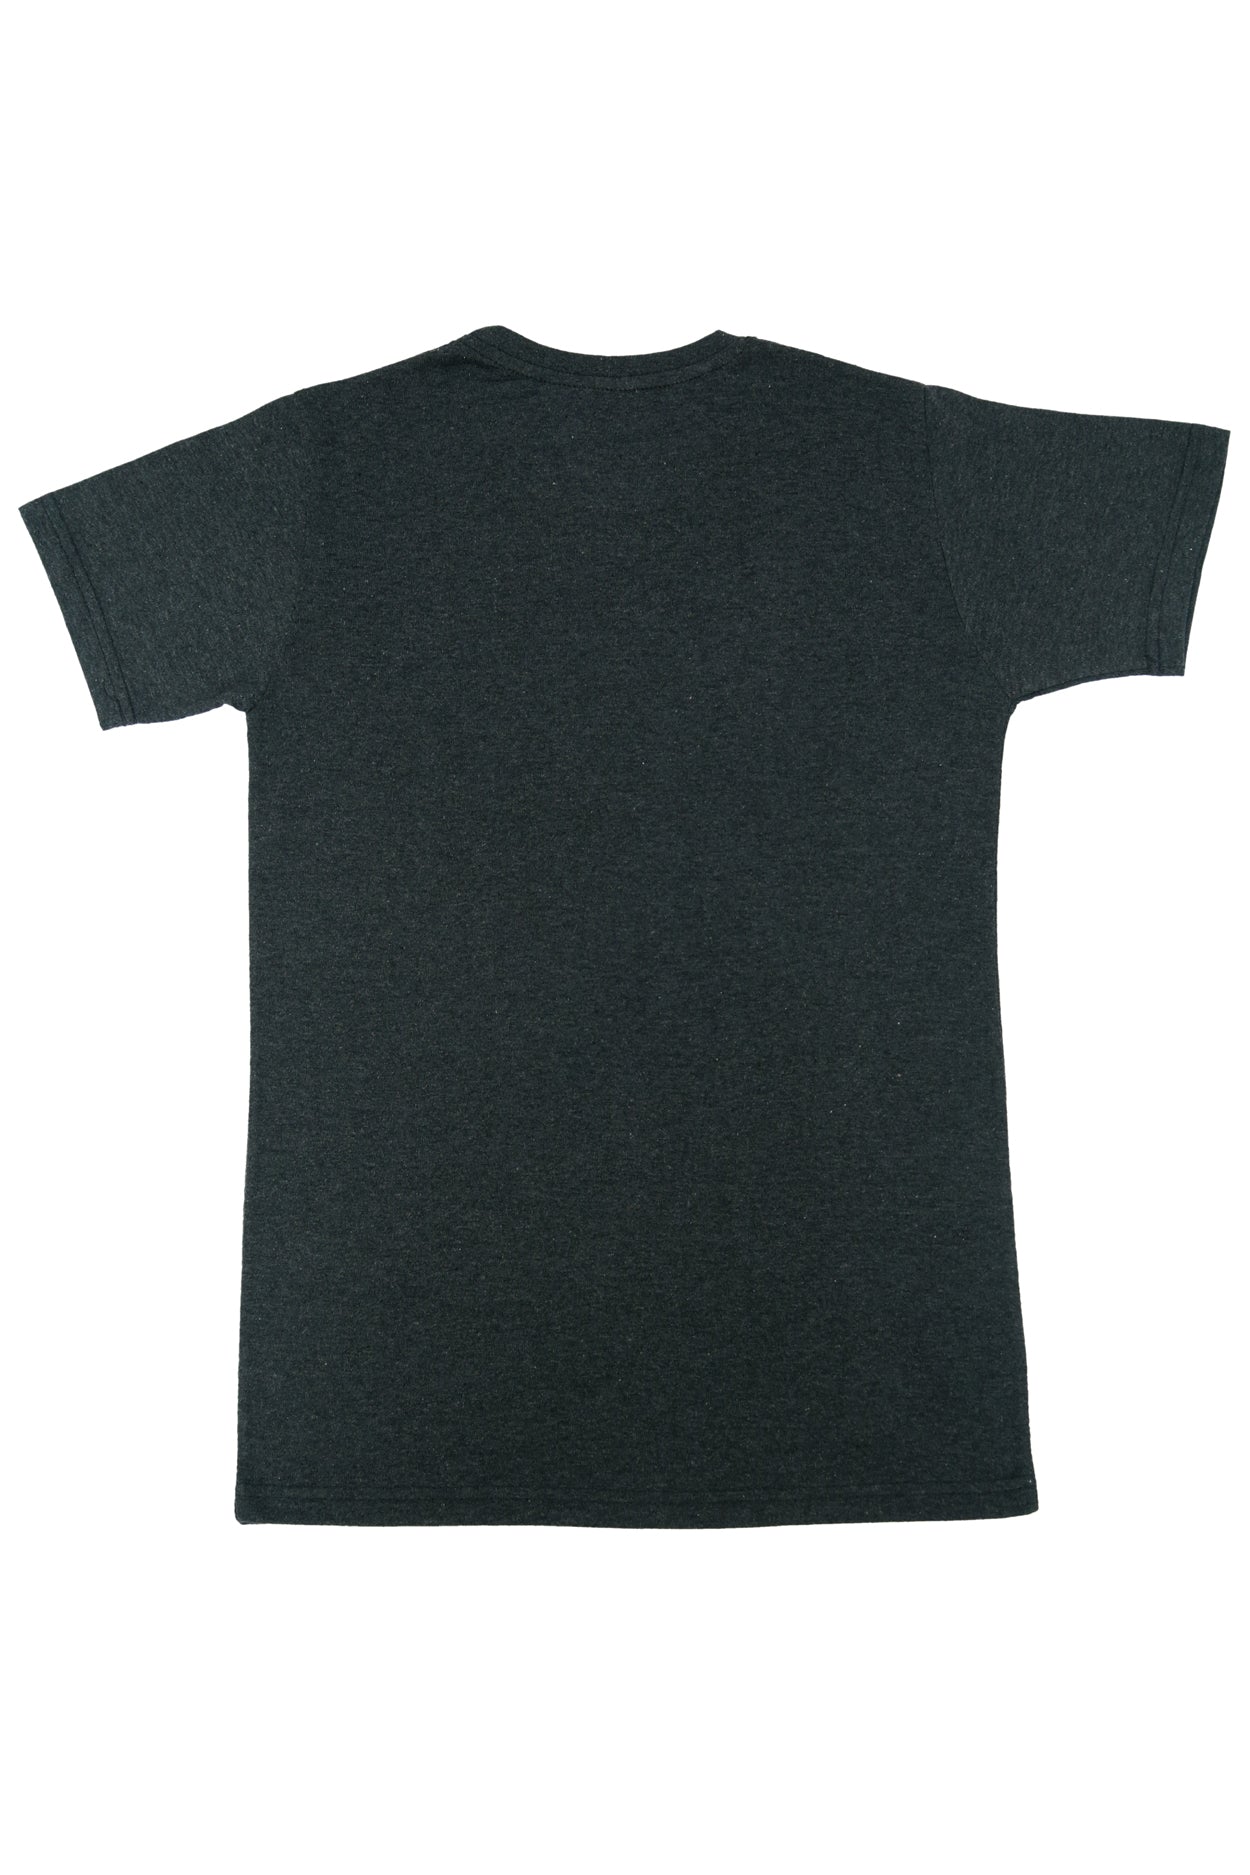 Unisex Casual T-Shirts (USA-25)